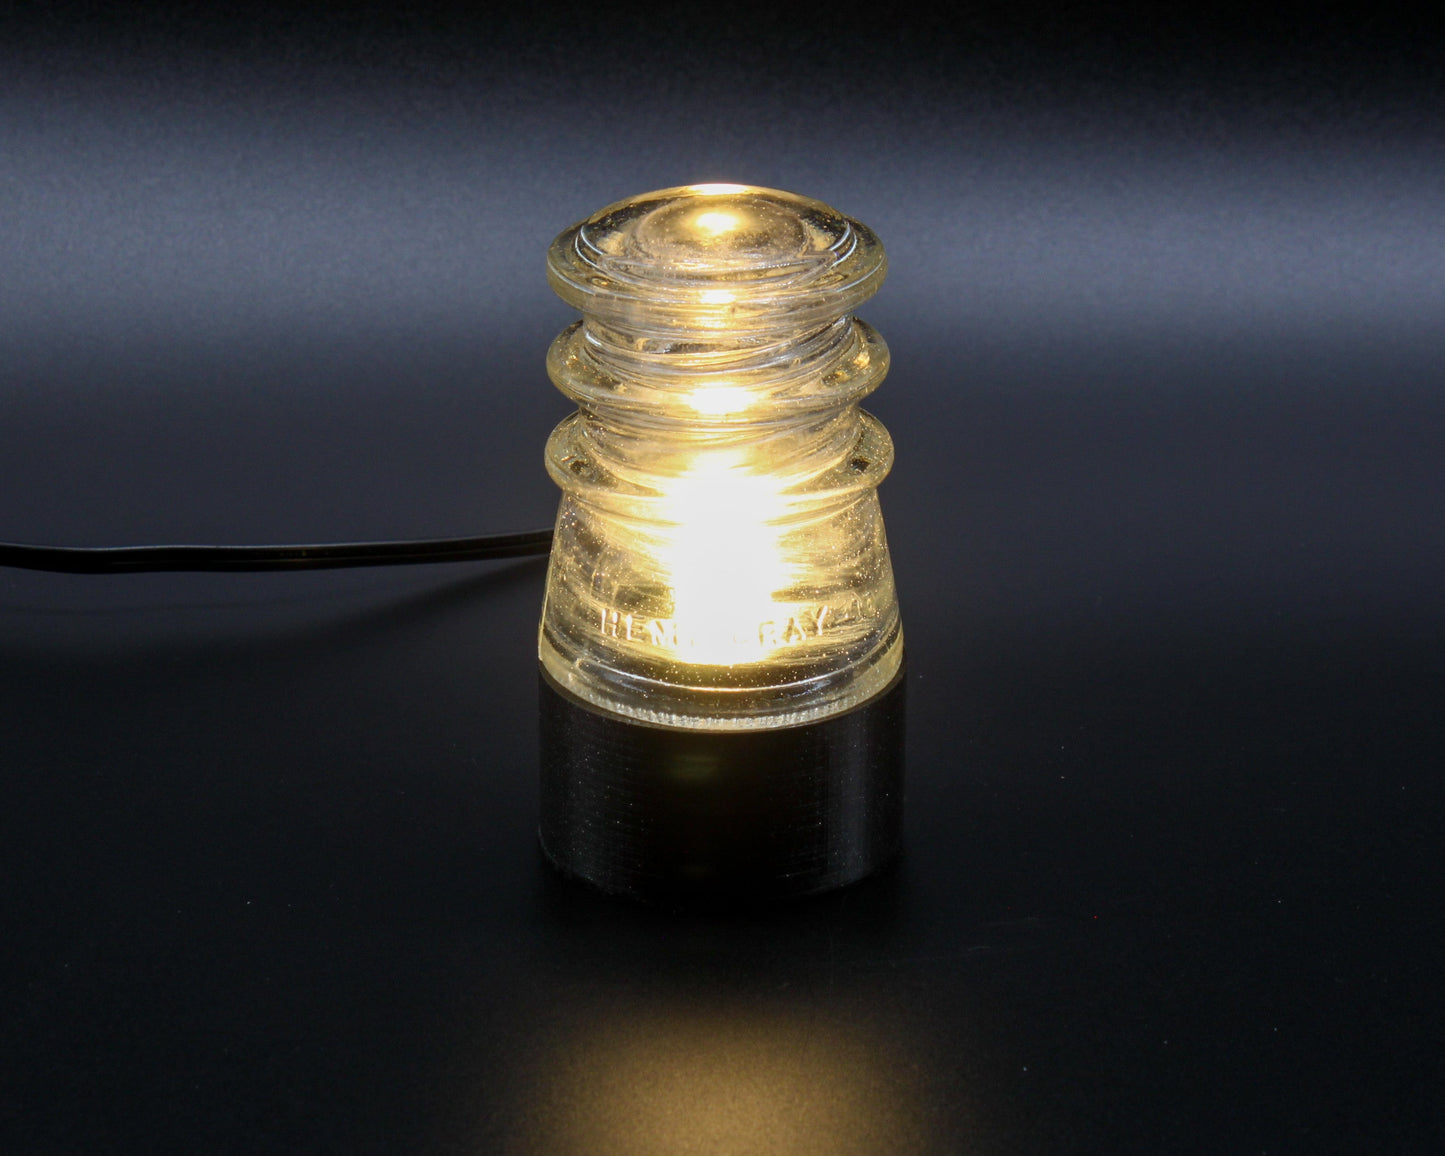 LightAndTimeArt Lamp base Lamp Base for "Hemingray-10, 12, AM. TEL." Glass Insulators, Industrial Lighting, Man Cave Deco, Neo Victorian Lamp design, Cyberpunk Lamp